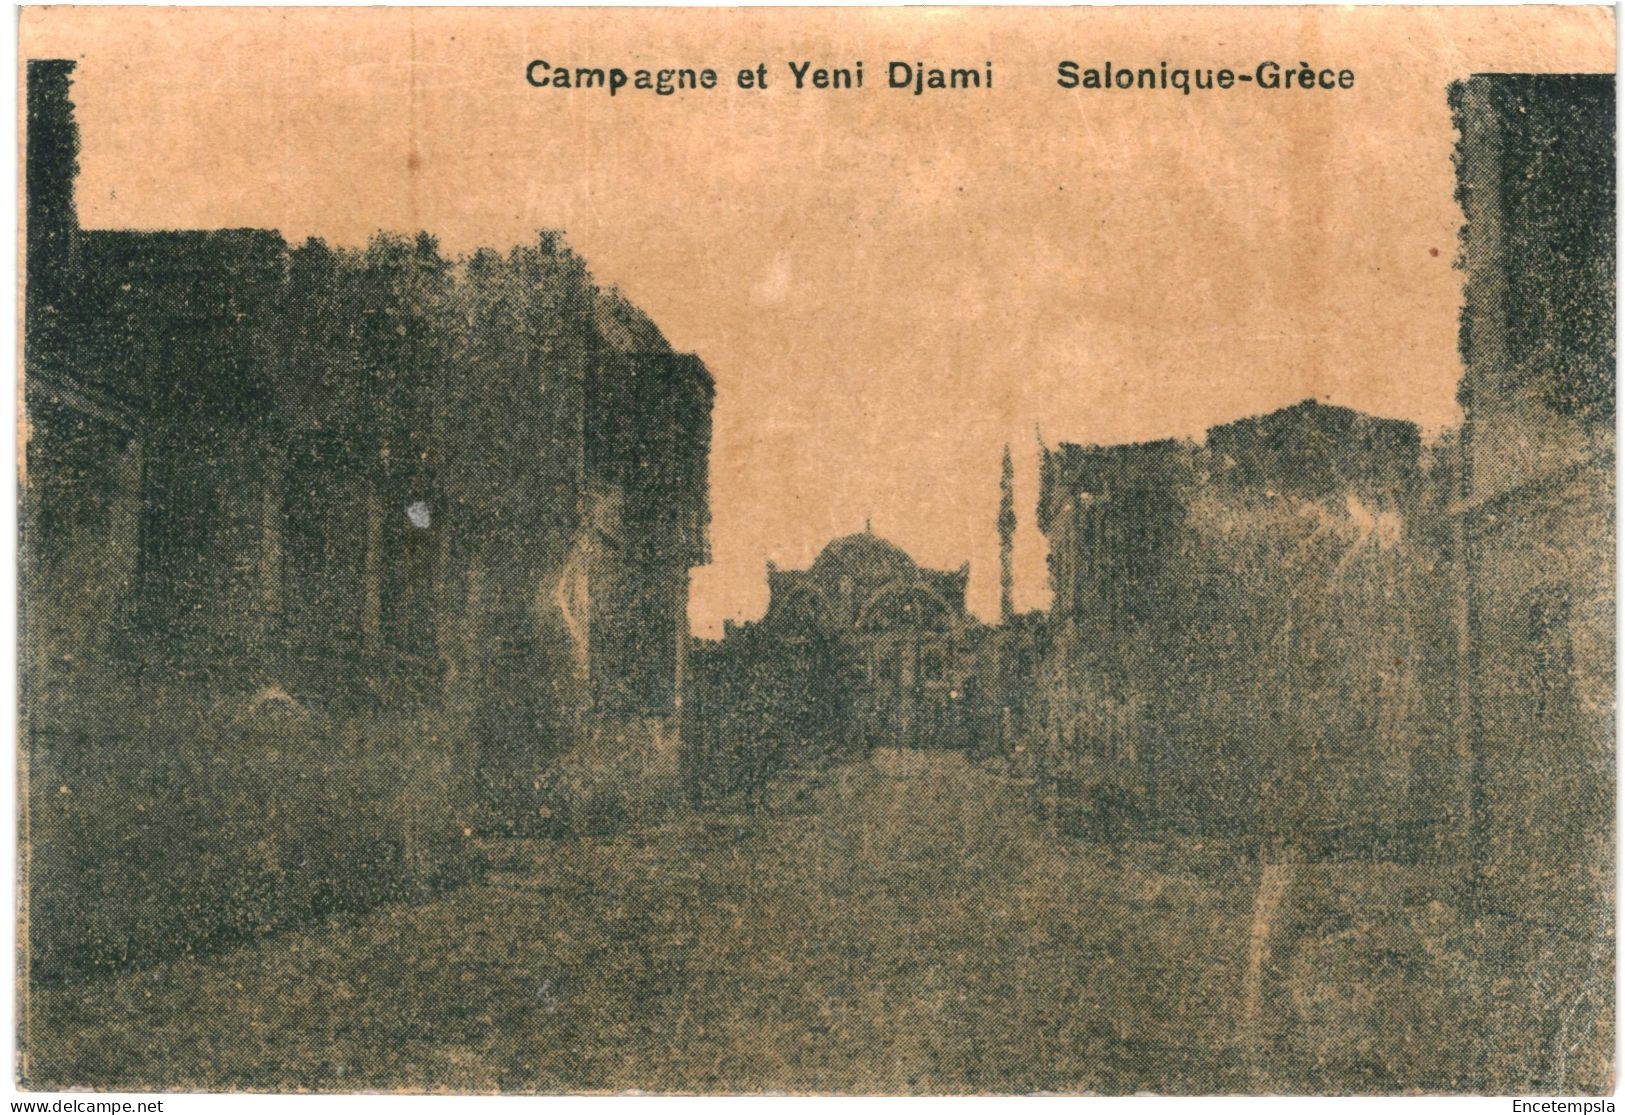 CPA Carte Postale  Grèce Salonique Campagne Et Yeni Djami   1907 VM80209 - Greece